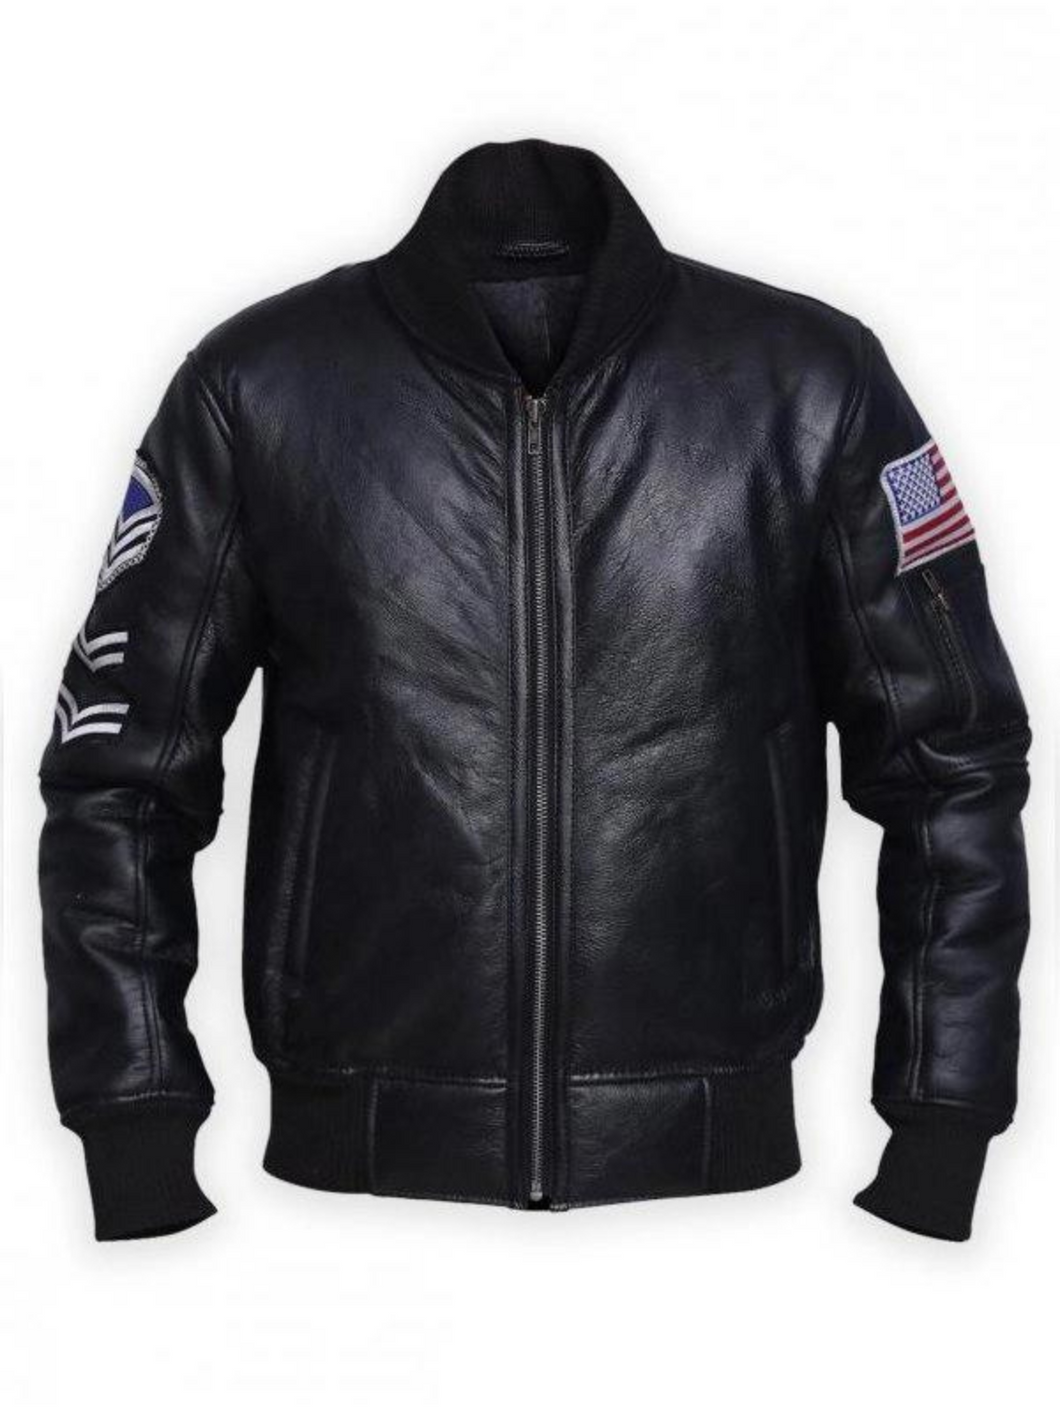 Men’s American Flag Leather Jacket